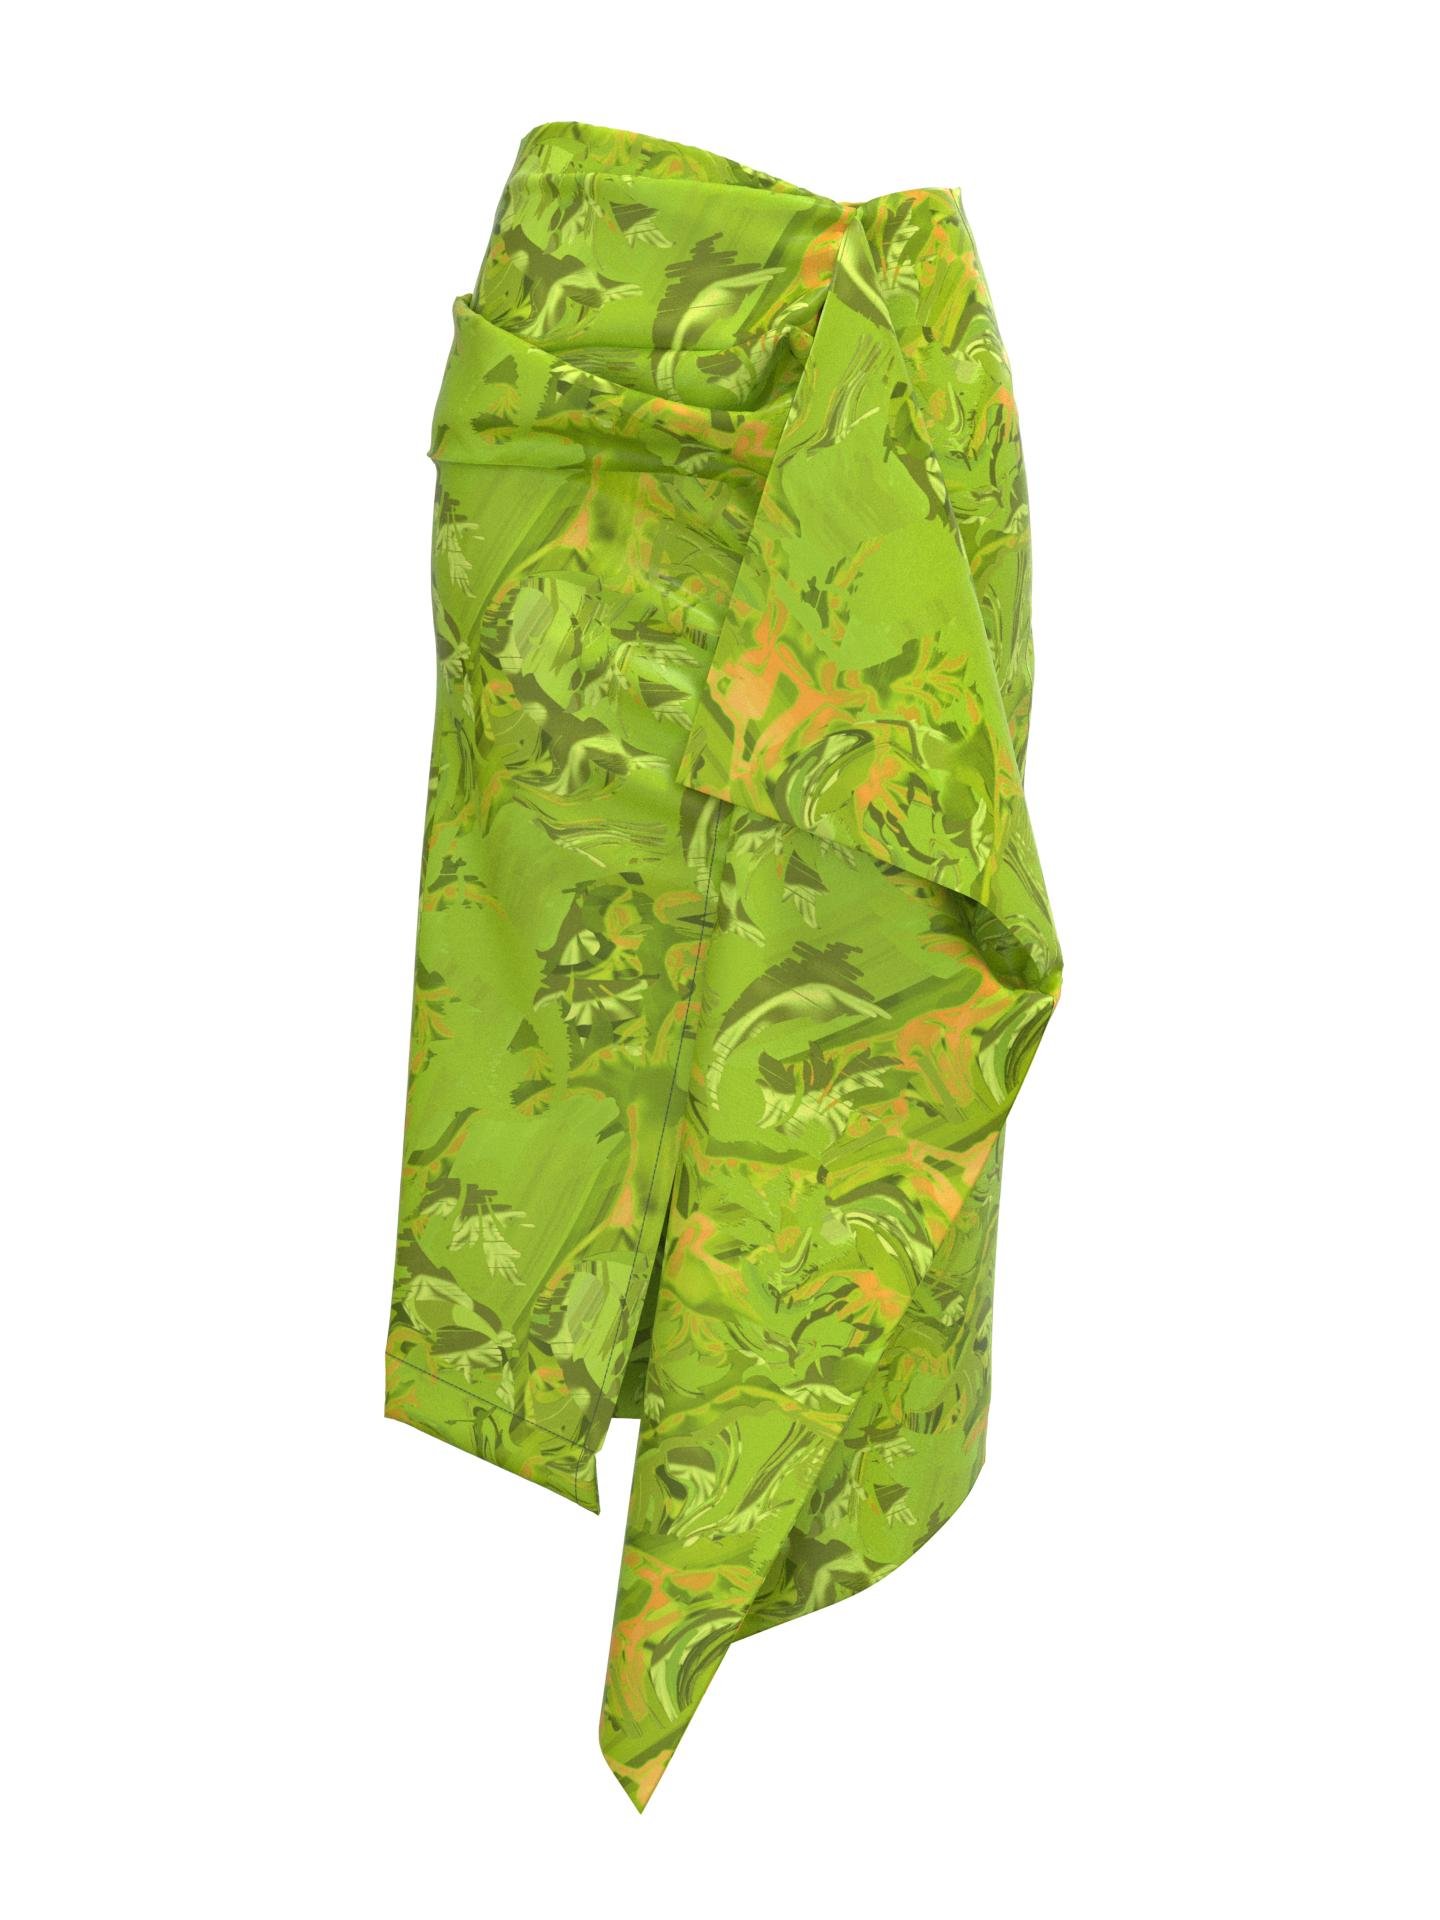 Danakil Wrap Skirt by RRY02